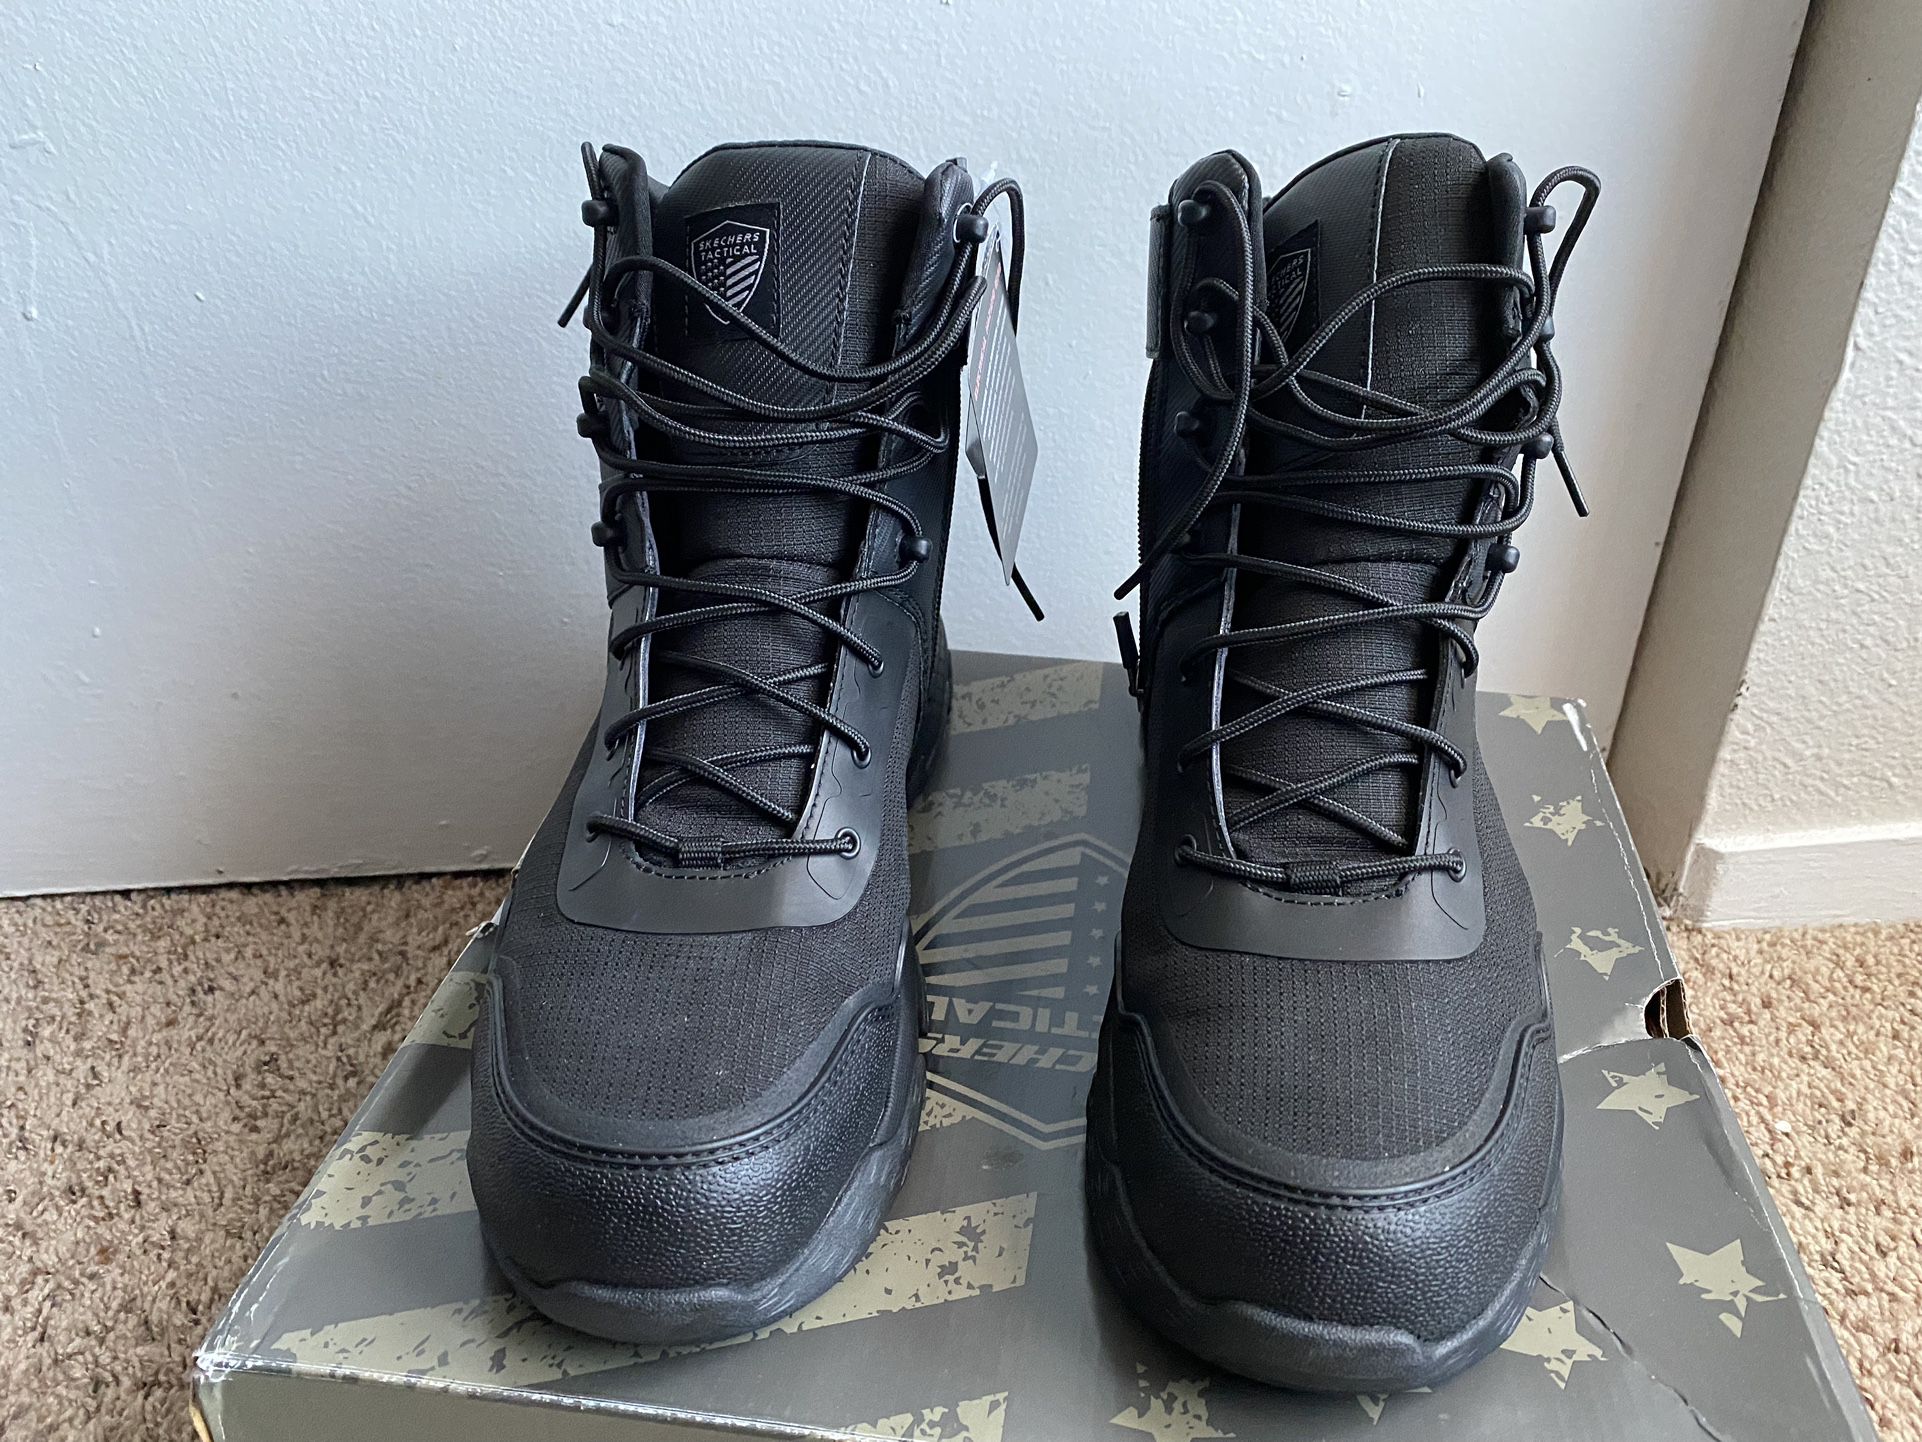 Skechers Tactical Boots Sale in Las Vegas, OfferUp